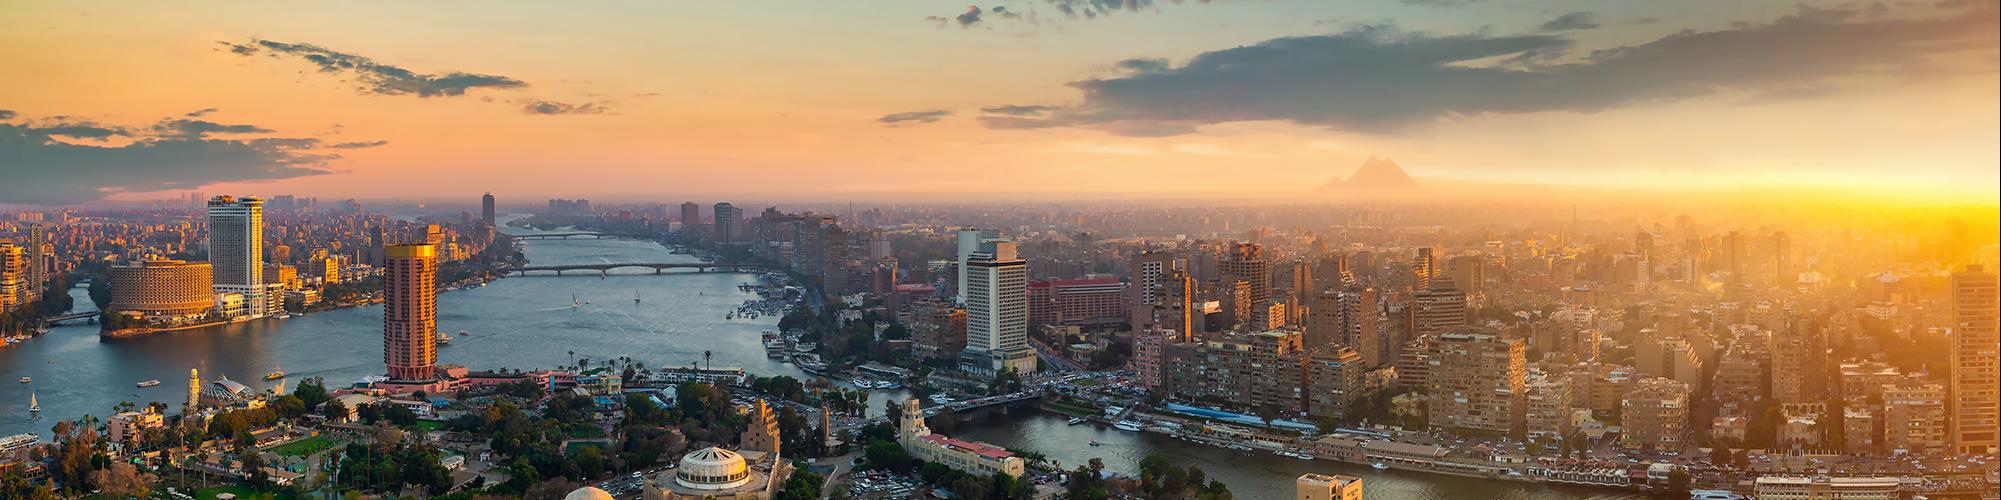 Cairo aerial photo